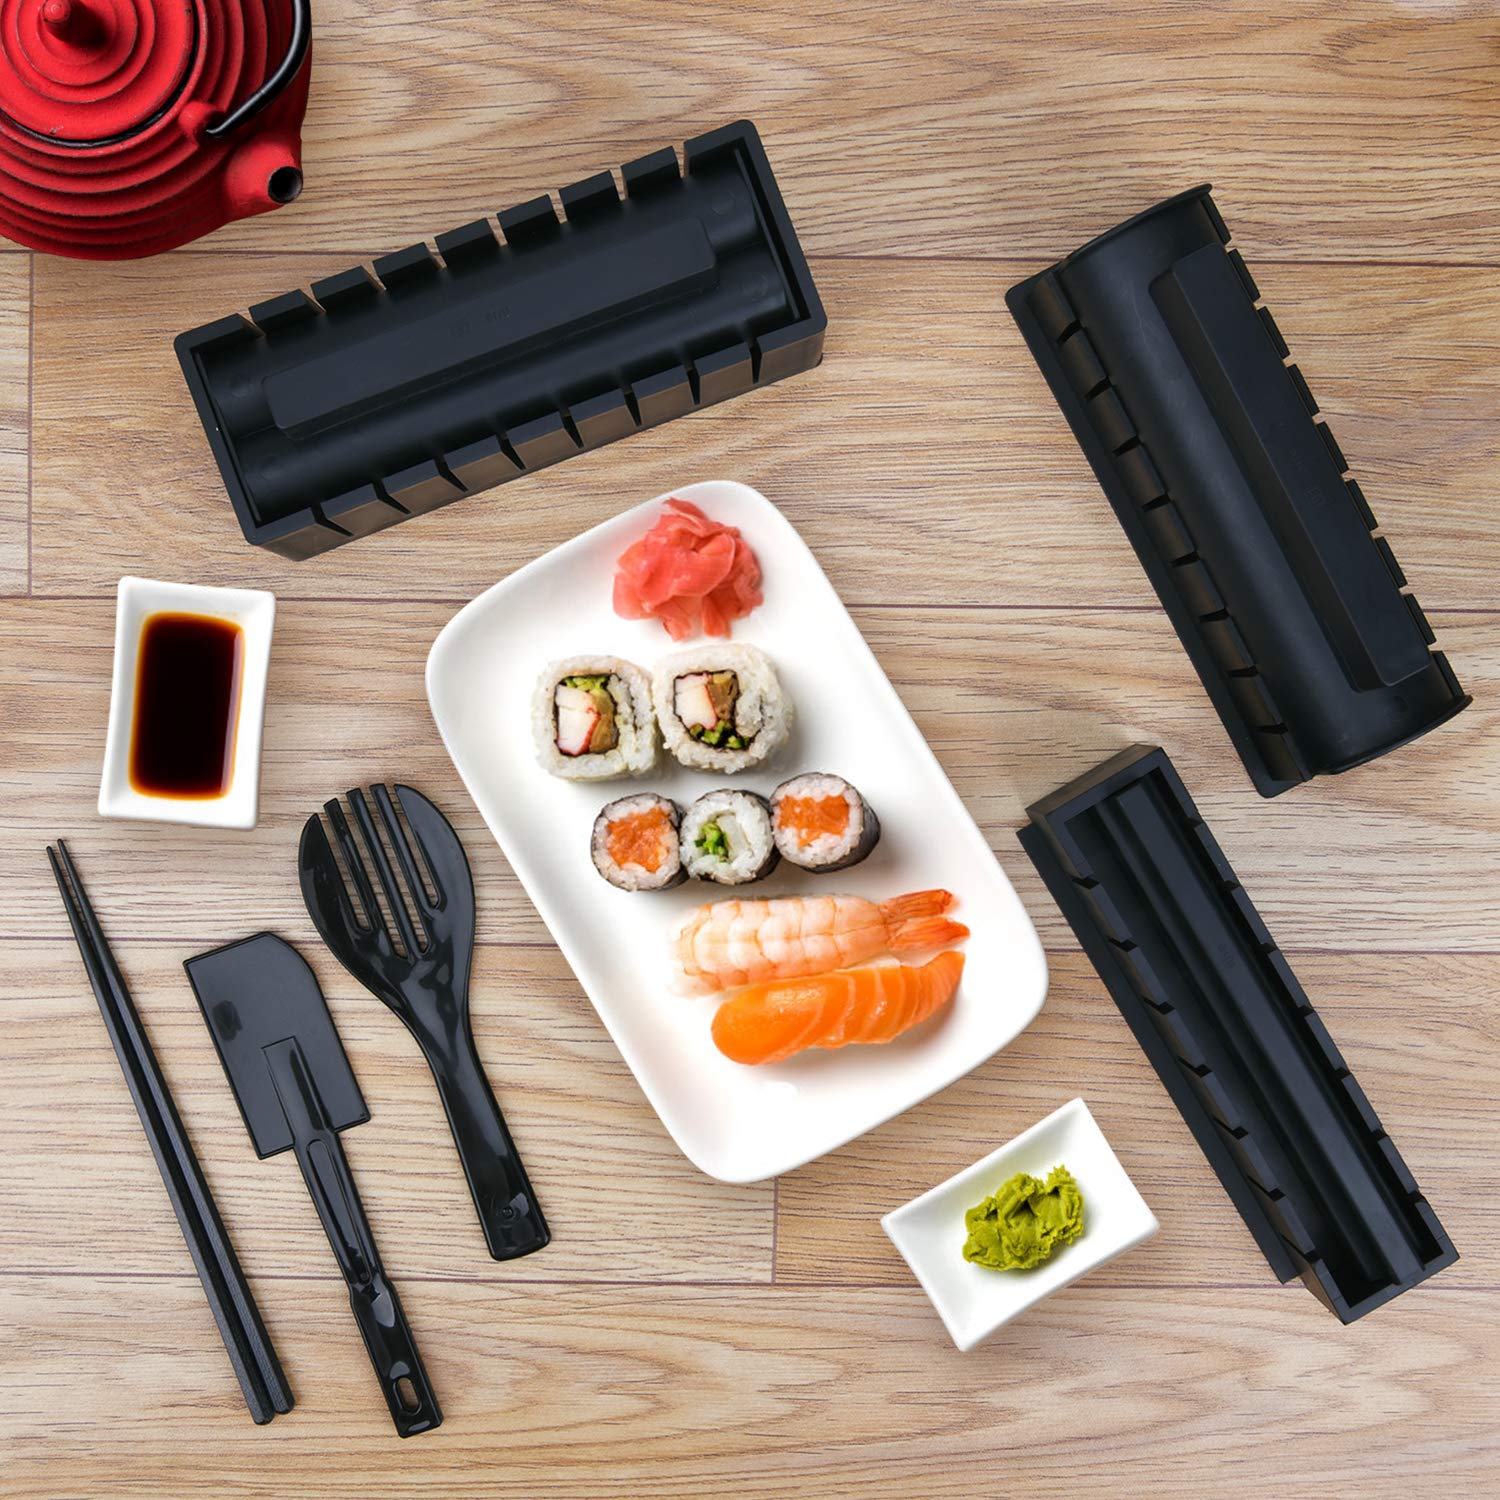 MLRYH Sushi Making Kit Sushi Maker 12 Pcs Plastic Premium set Sushi Tool Set Sushi Rice Roll Mold Shapes, DIY Sushi Roller Tool for Home Beginners.